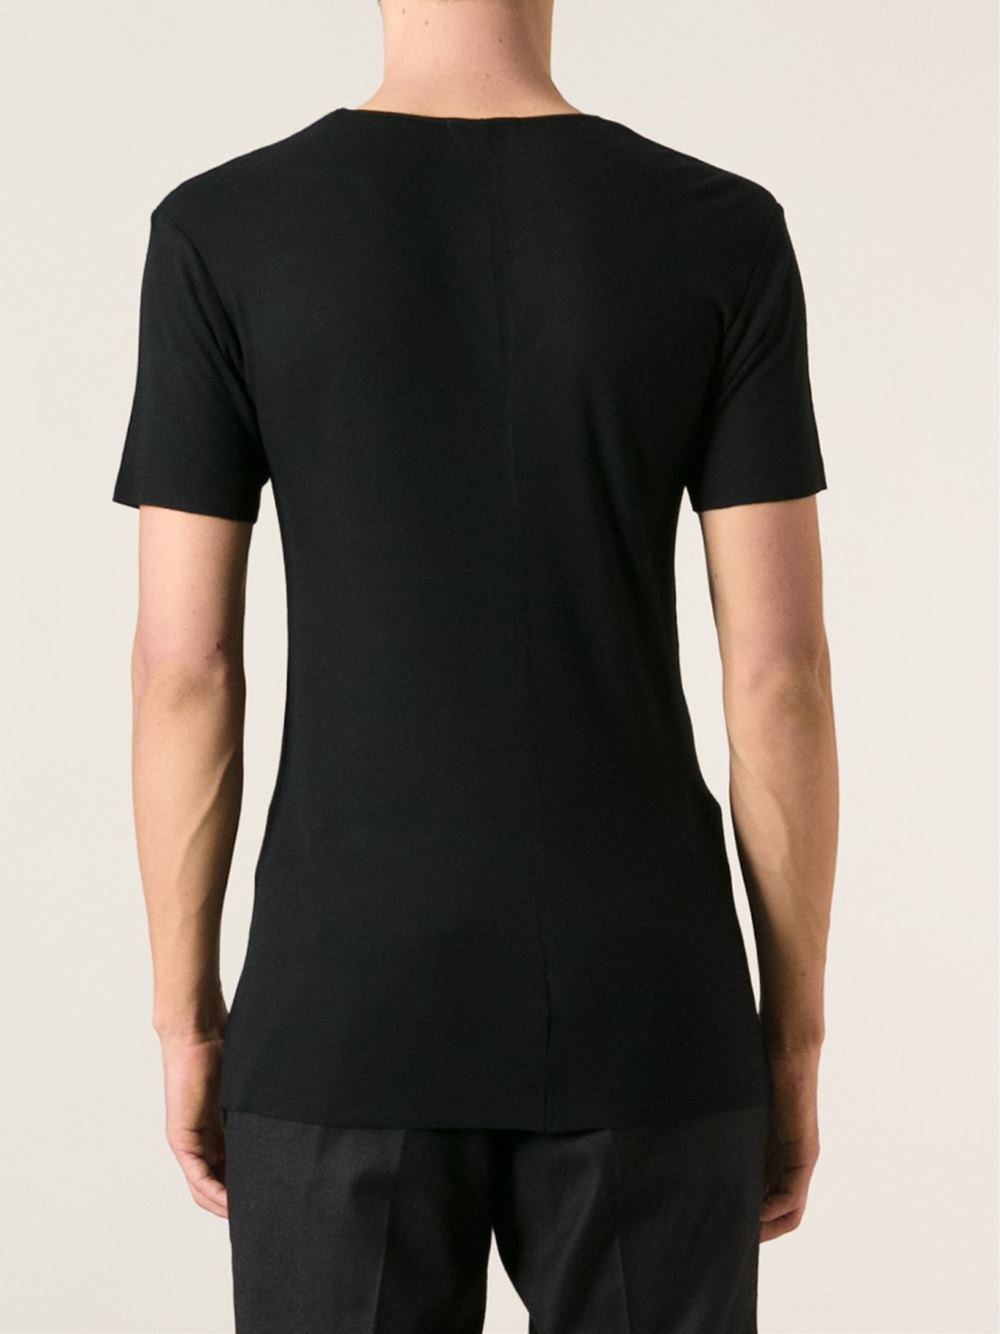 Lyst - Unconditional Ribbed V-neck T-shirt in Black for Men